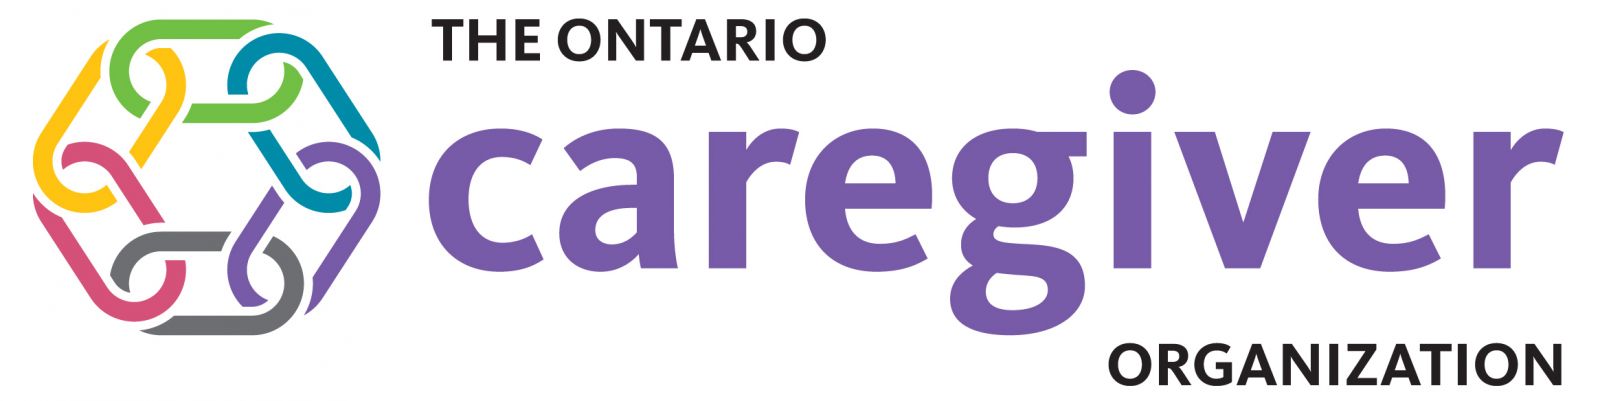 Logo for the Ontario Caregiver Organization